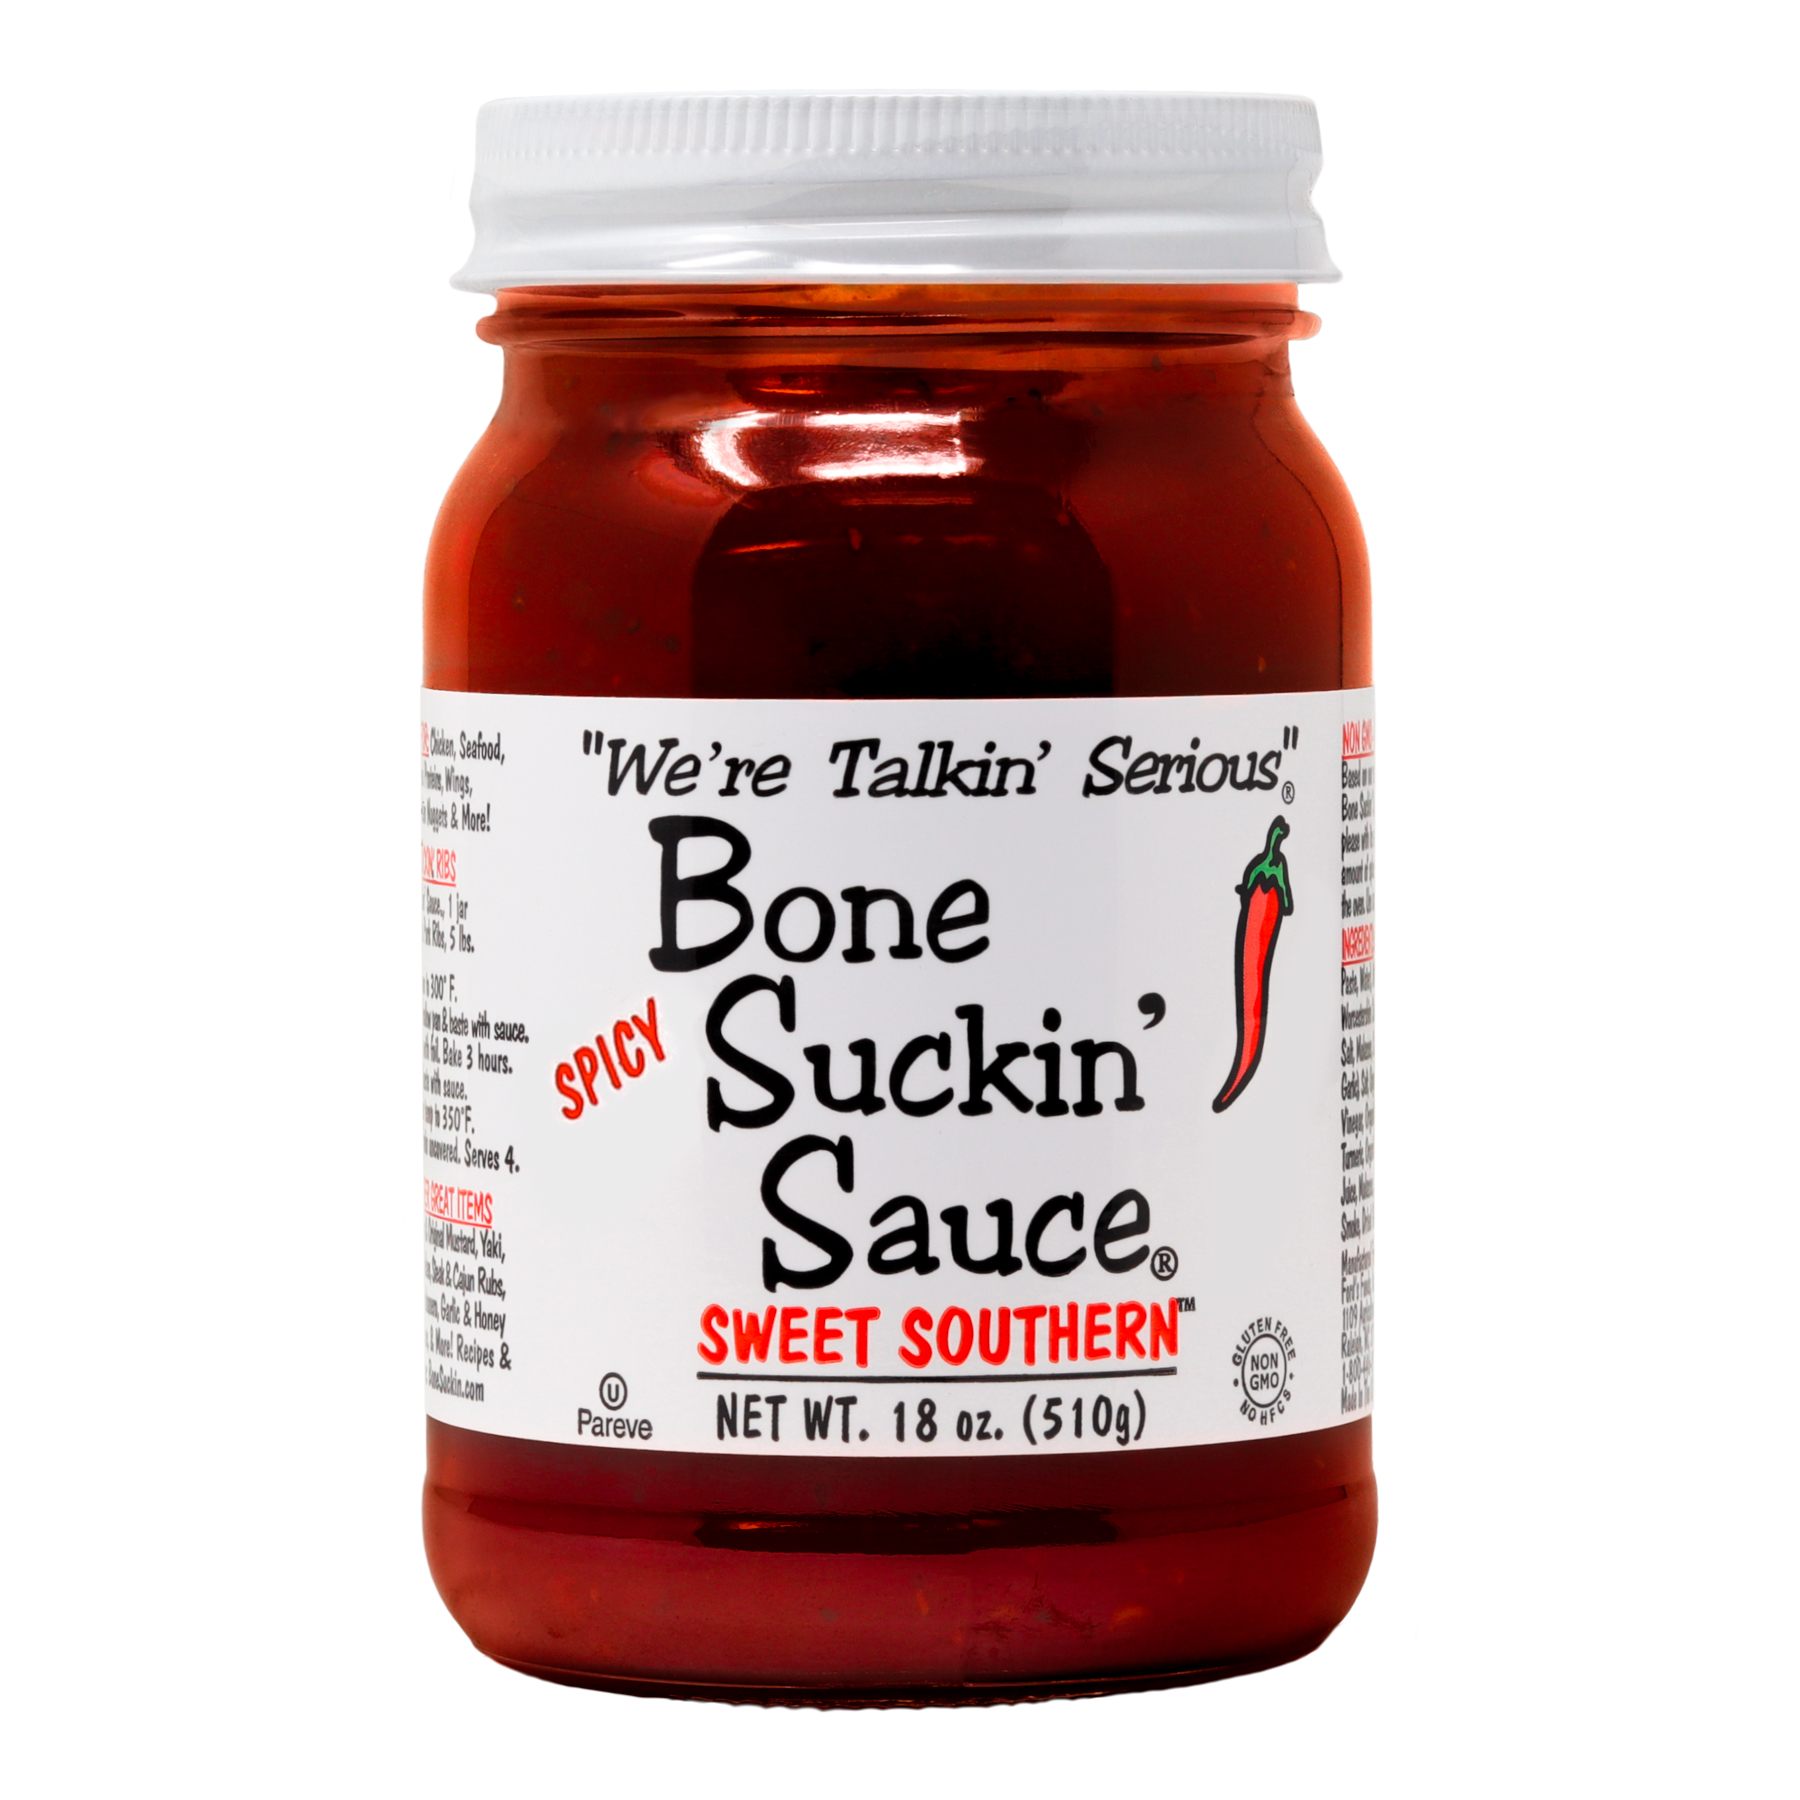 Spicy Sweet Southern Bone Suckin' Sauce, 18 oz. Jar